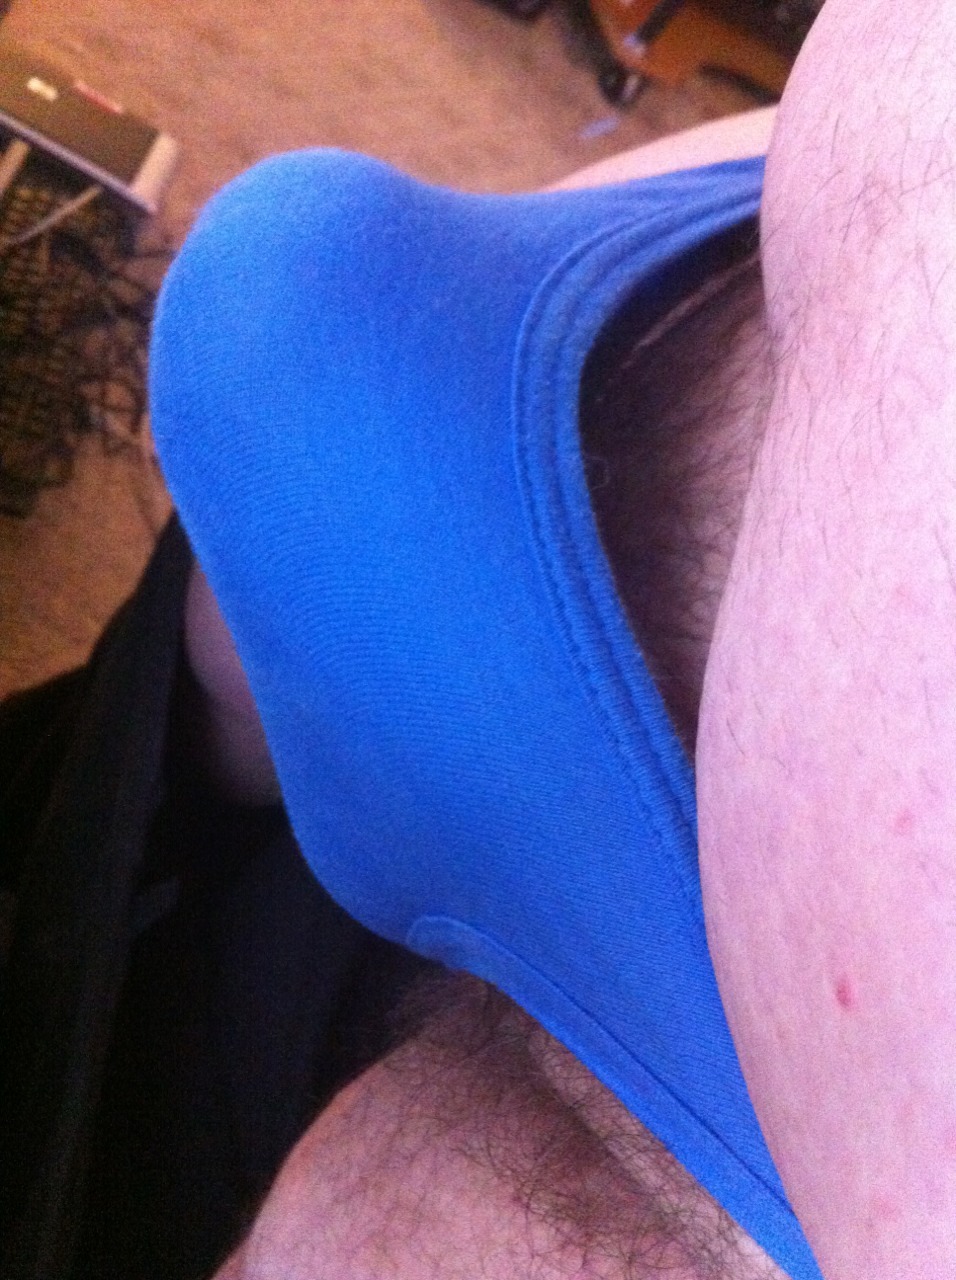 rev-j:  Blue undies